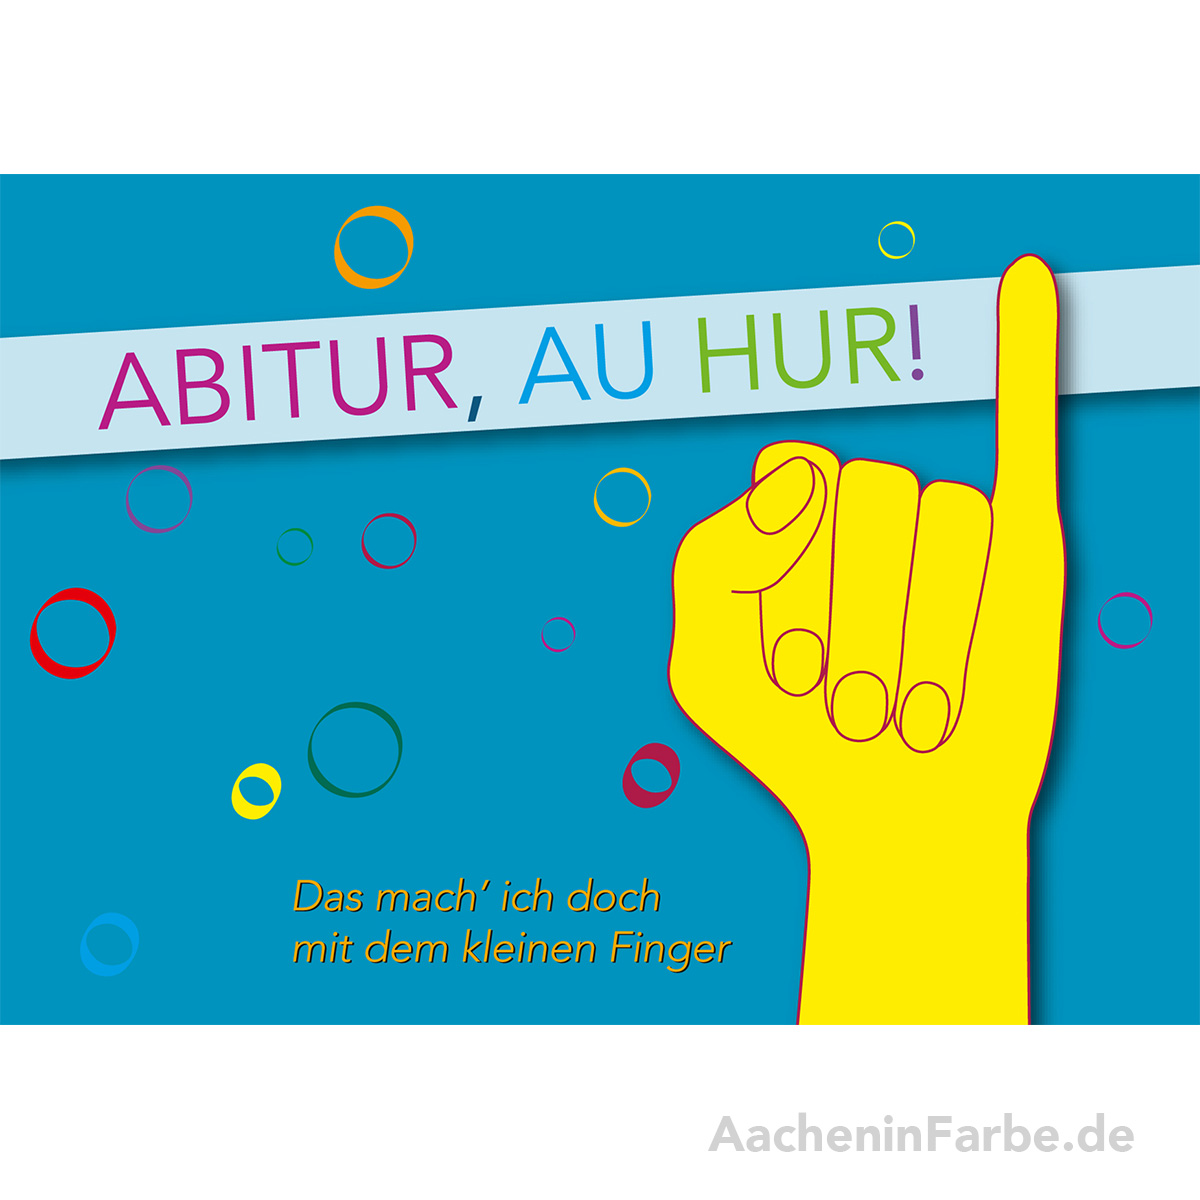 Grußkarte "Abitur, au hur"